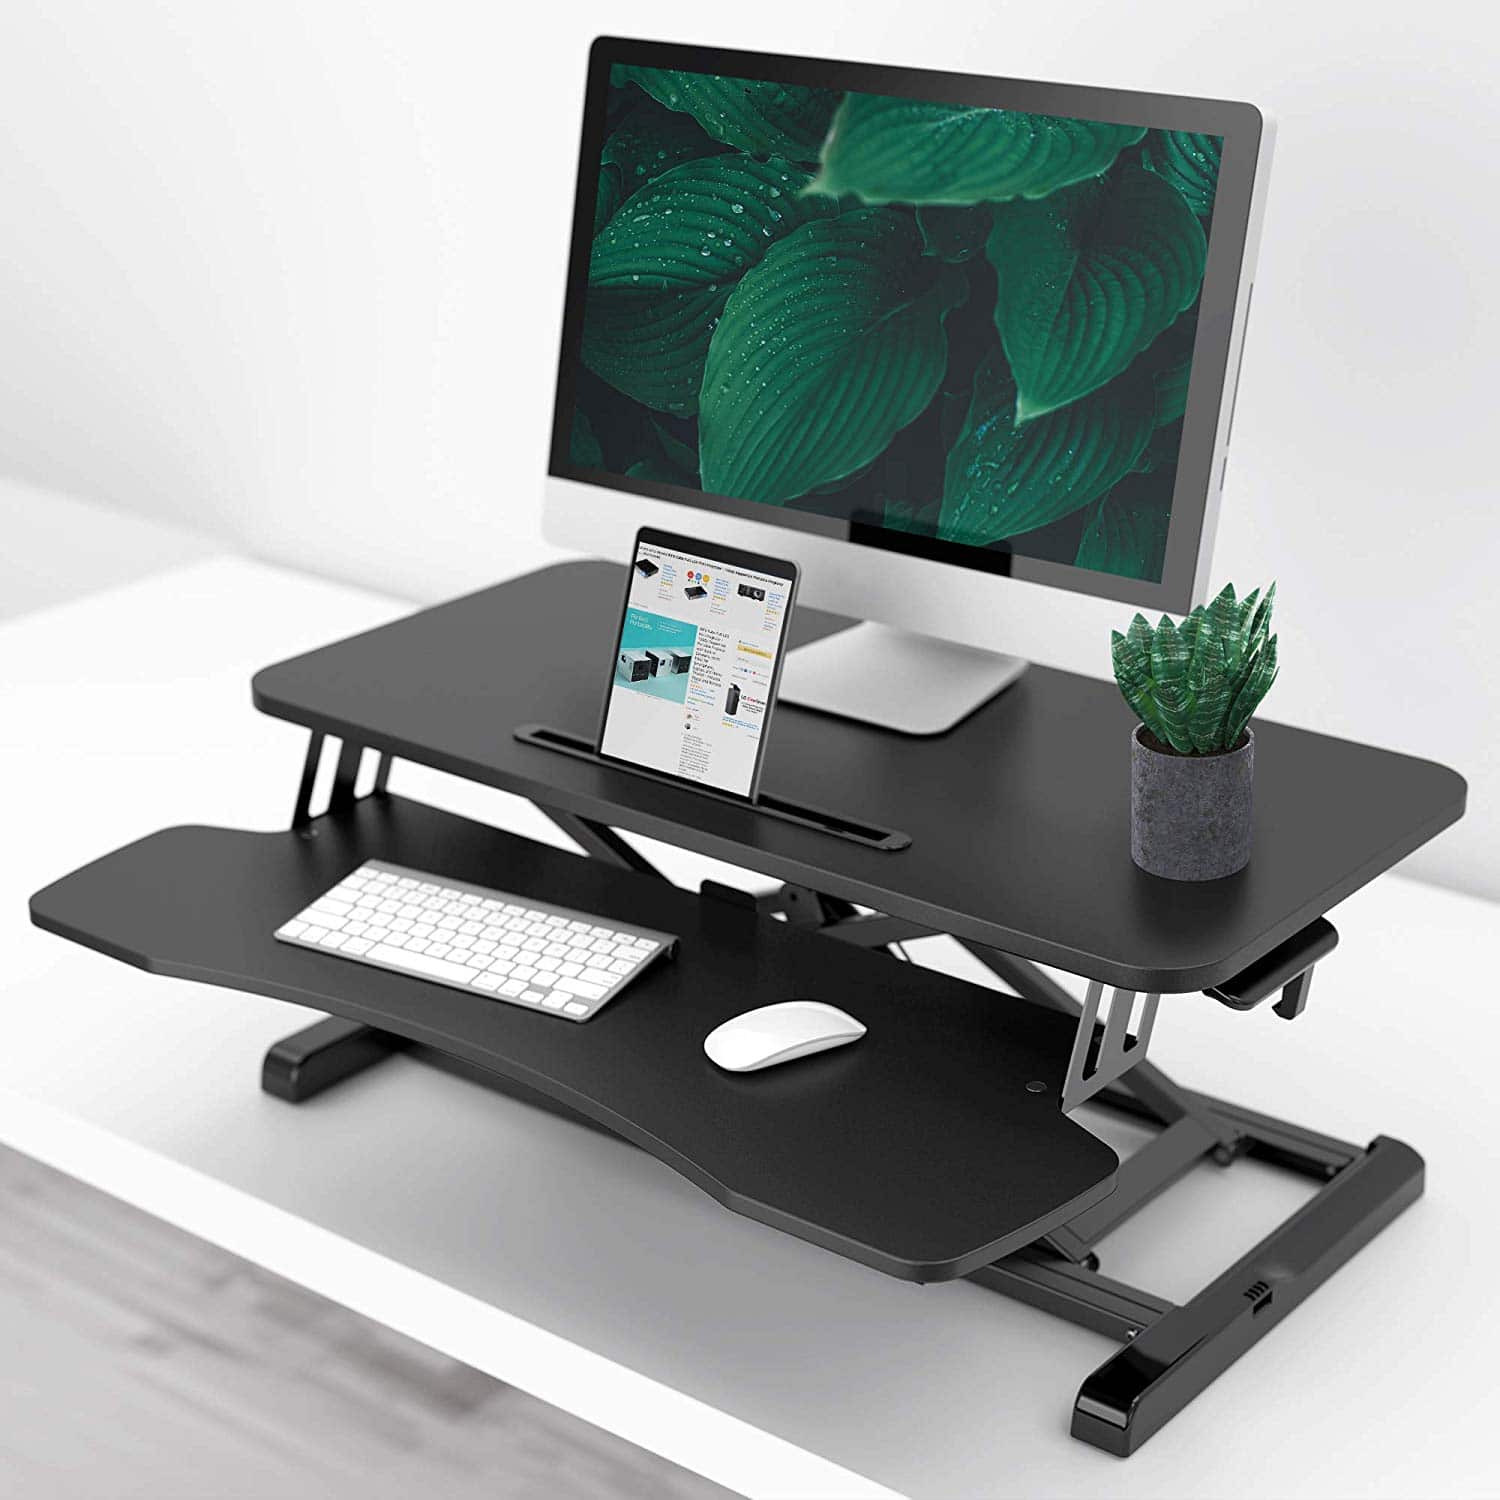 RIF6 Adjustable Height Standing Desk Converter